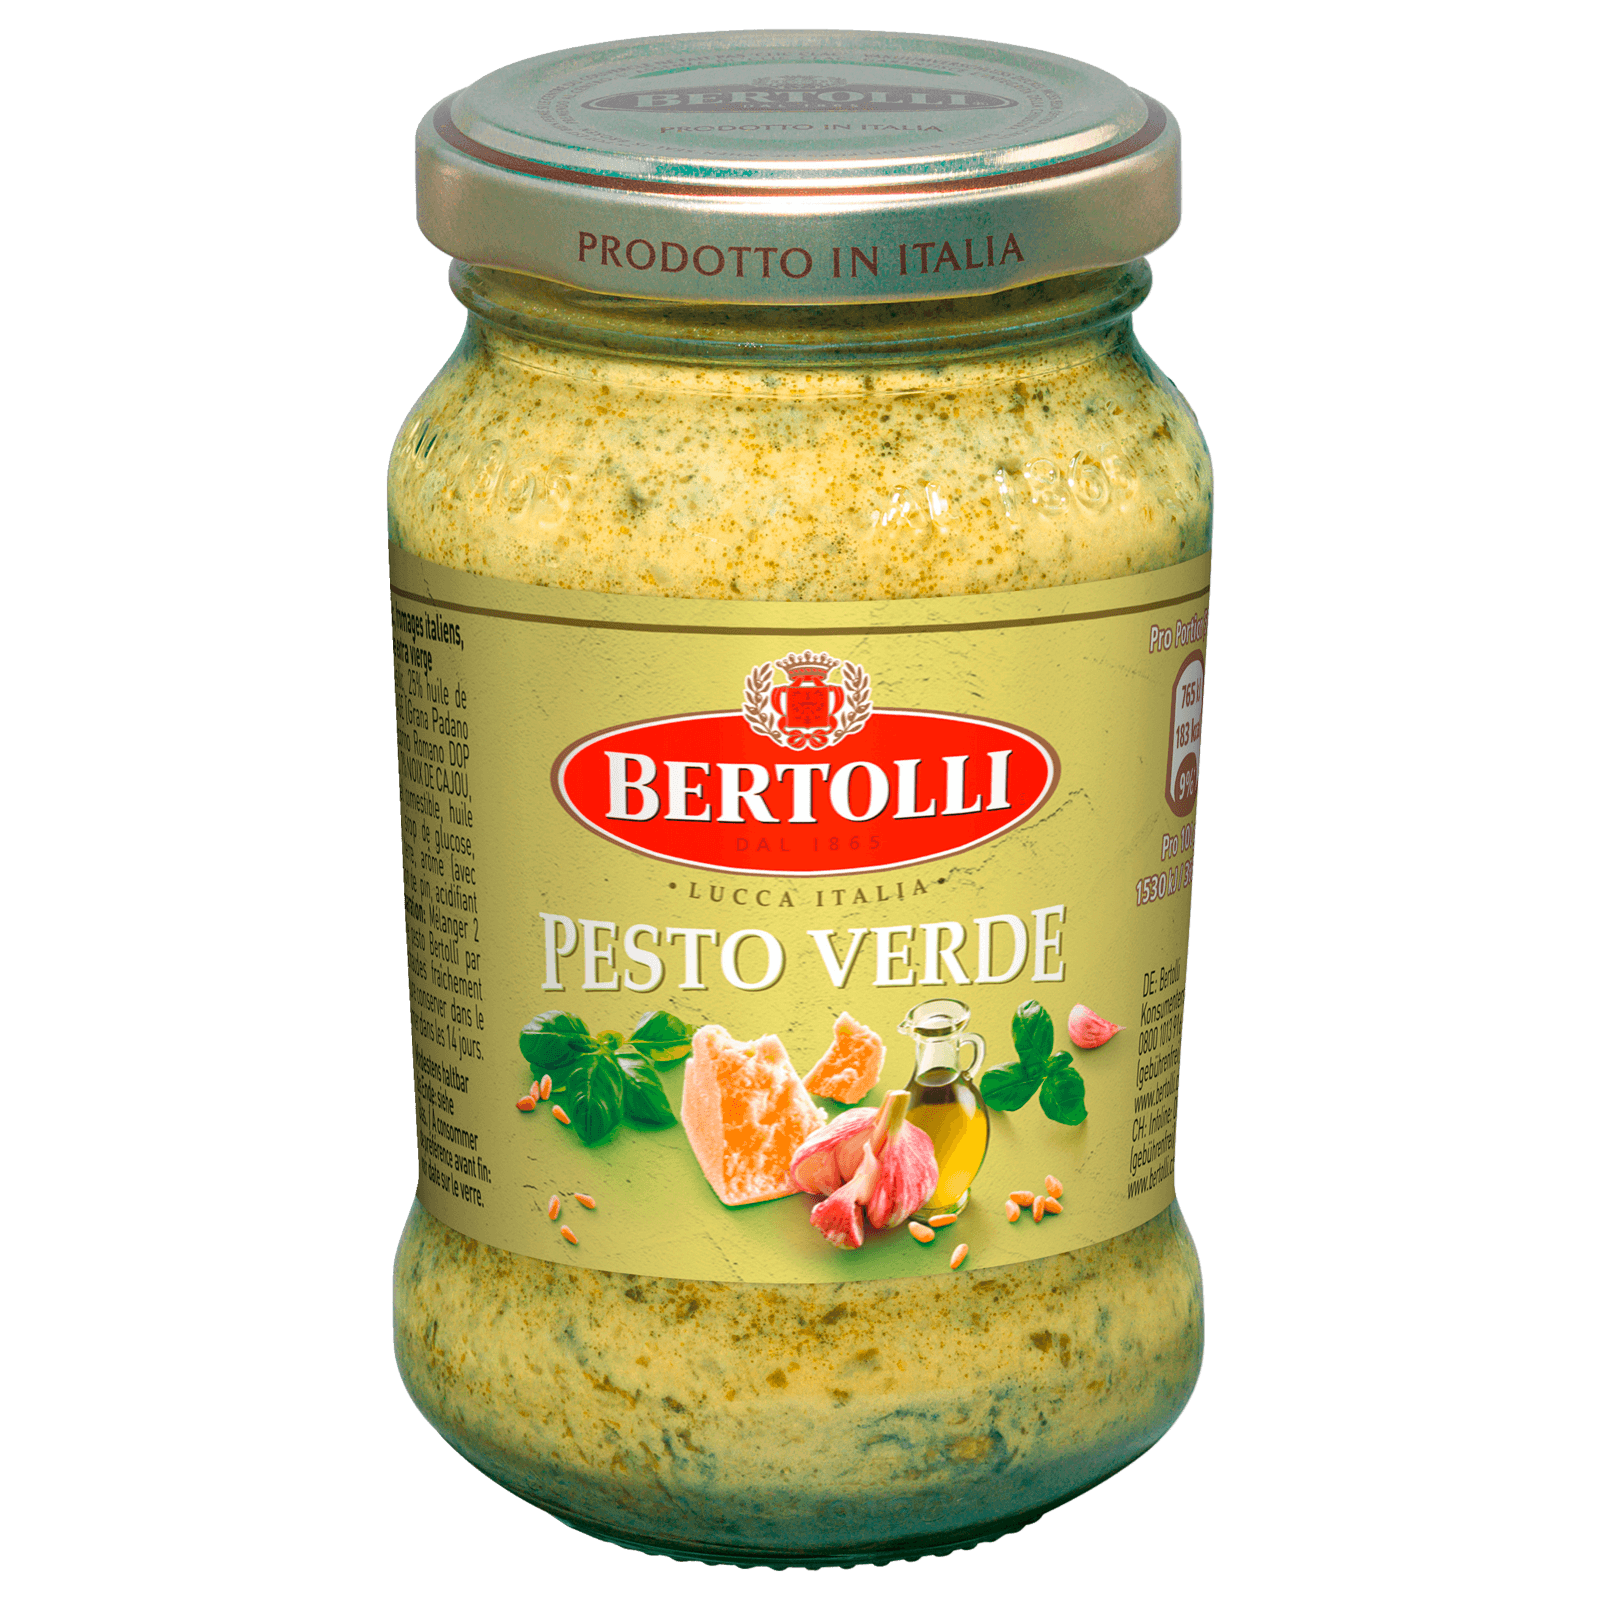 Bertolli Pesto Verde Glas 185 g bei REWE online bestellen!